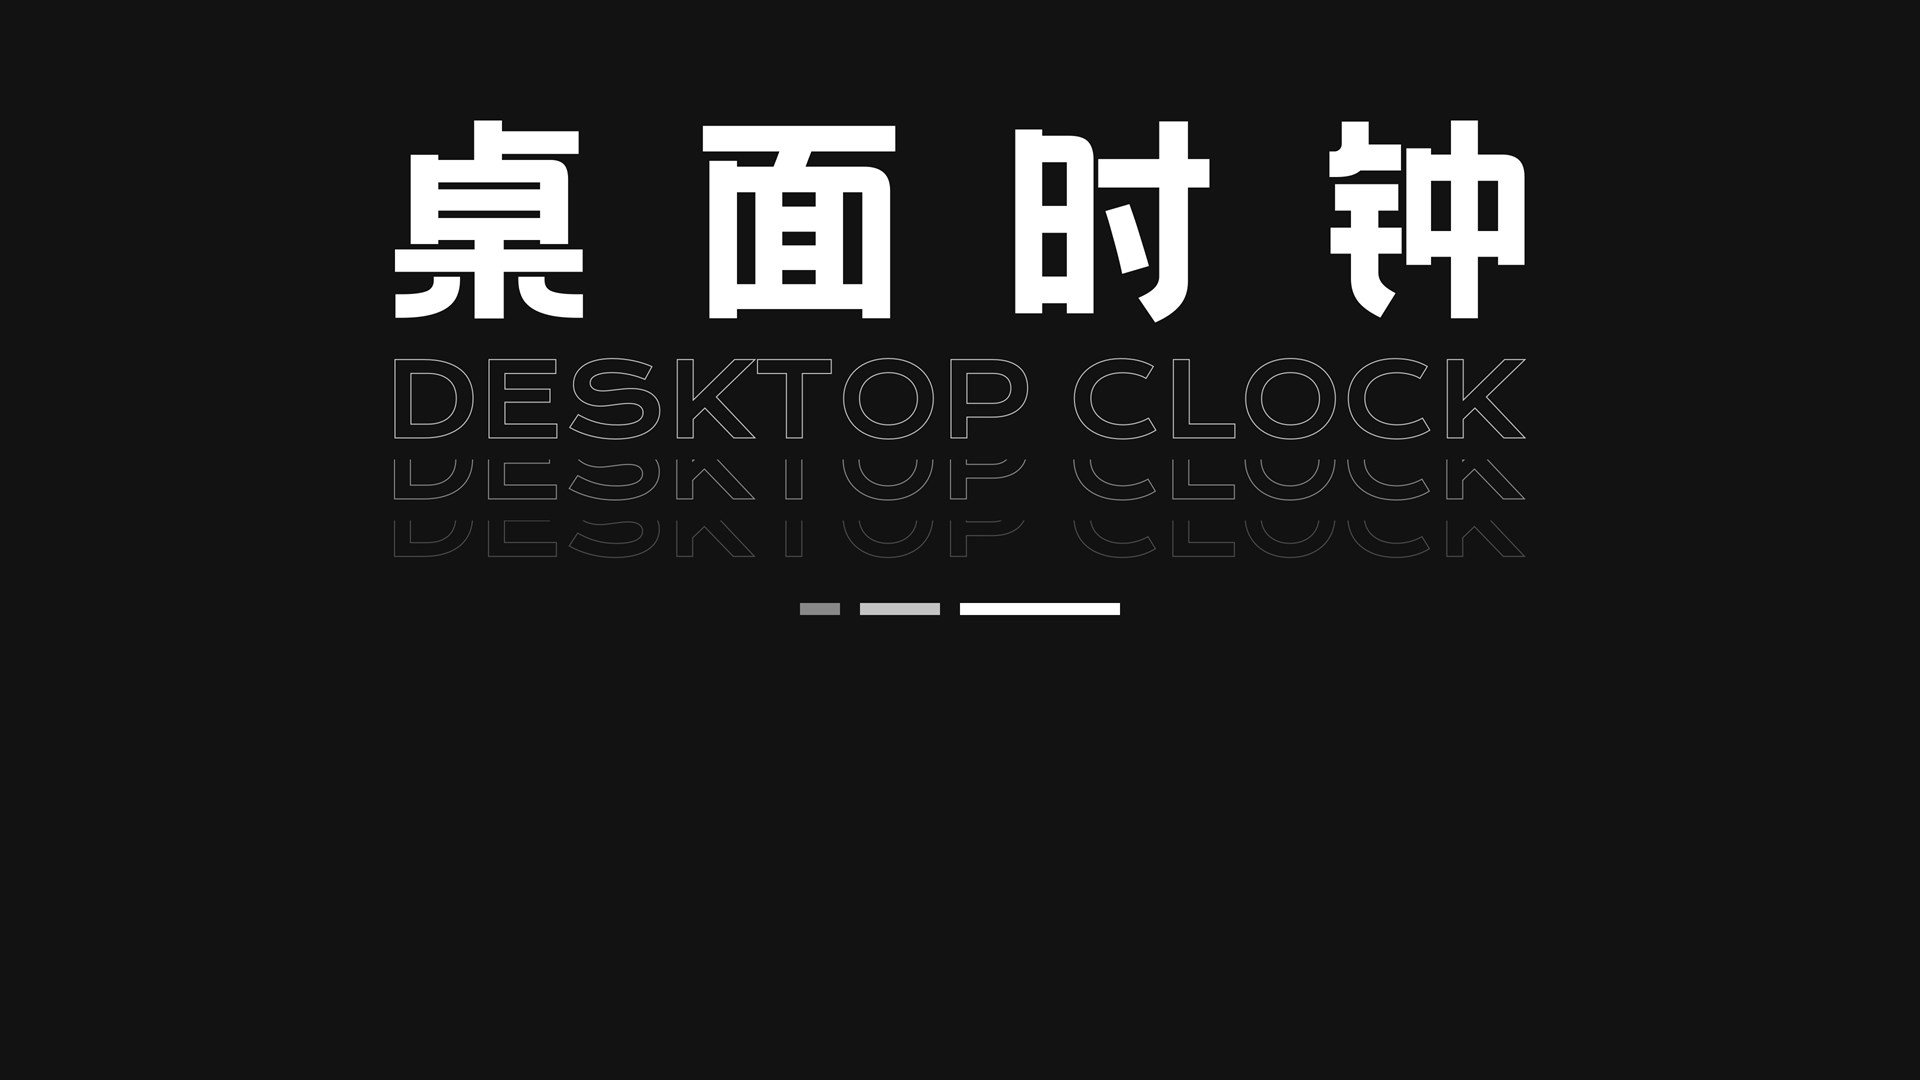 Get Desktop digital clock - Microsoft Store en-IN